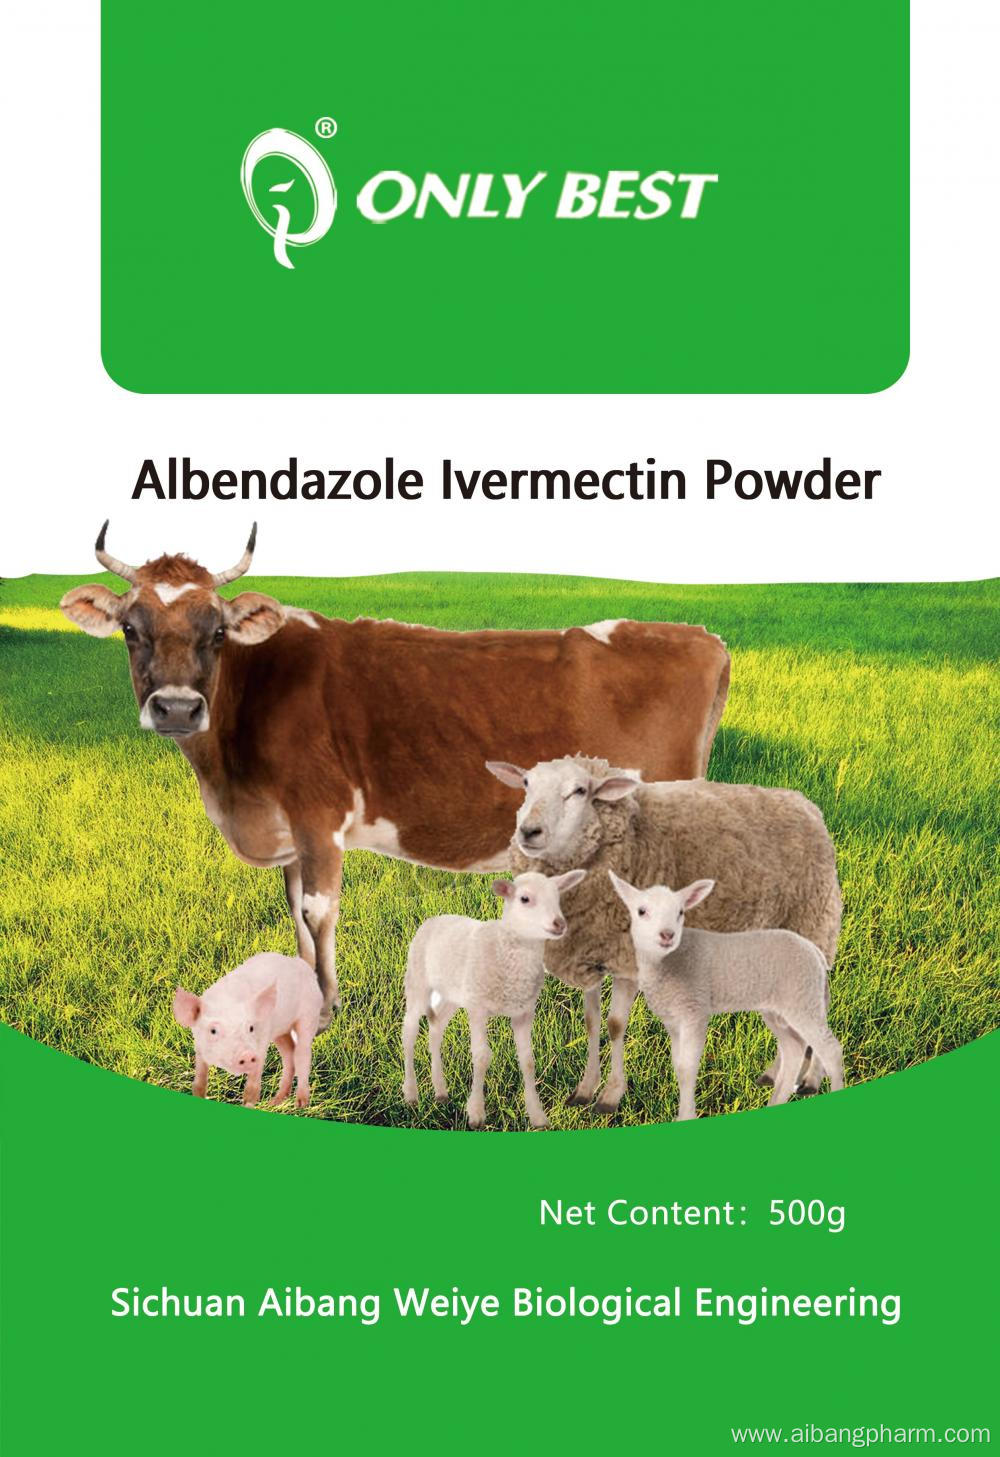 Albendazole and Ivermectin Powder